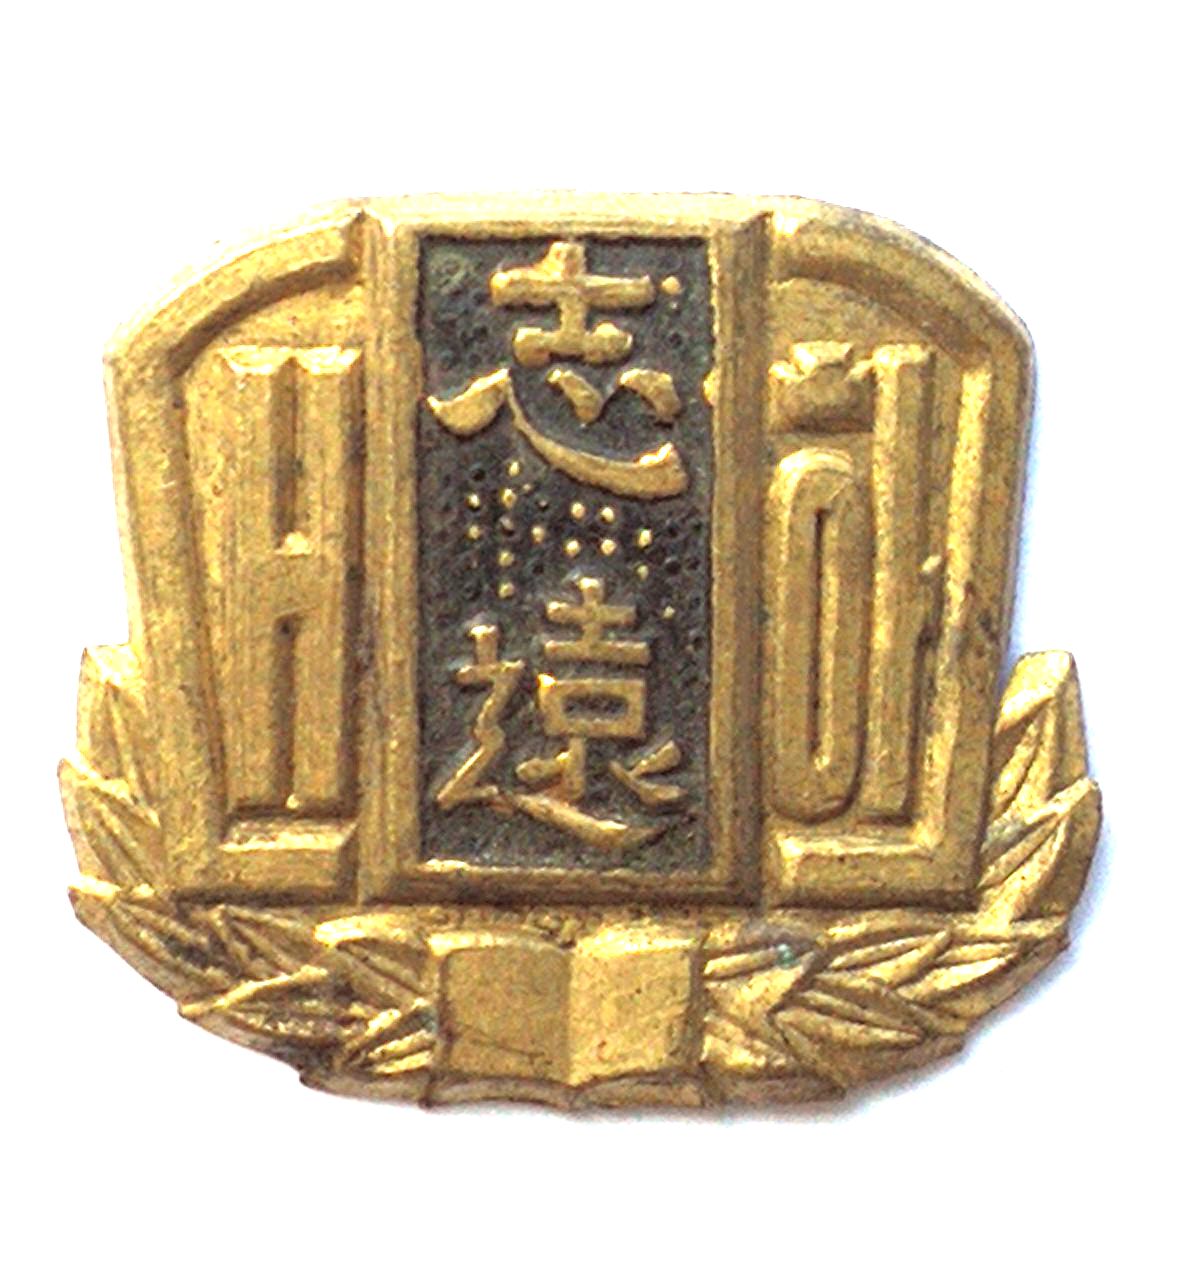 L5418, Korea Cap Badge "Aim High, Writtn by Kim Hyong Jik", 1990's